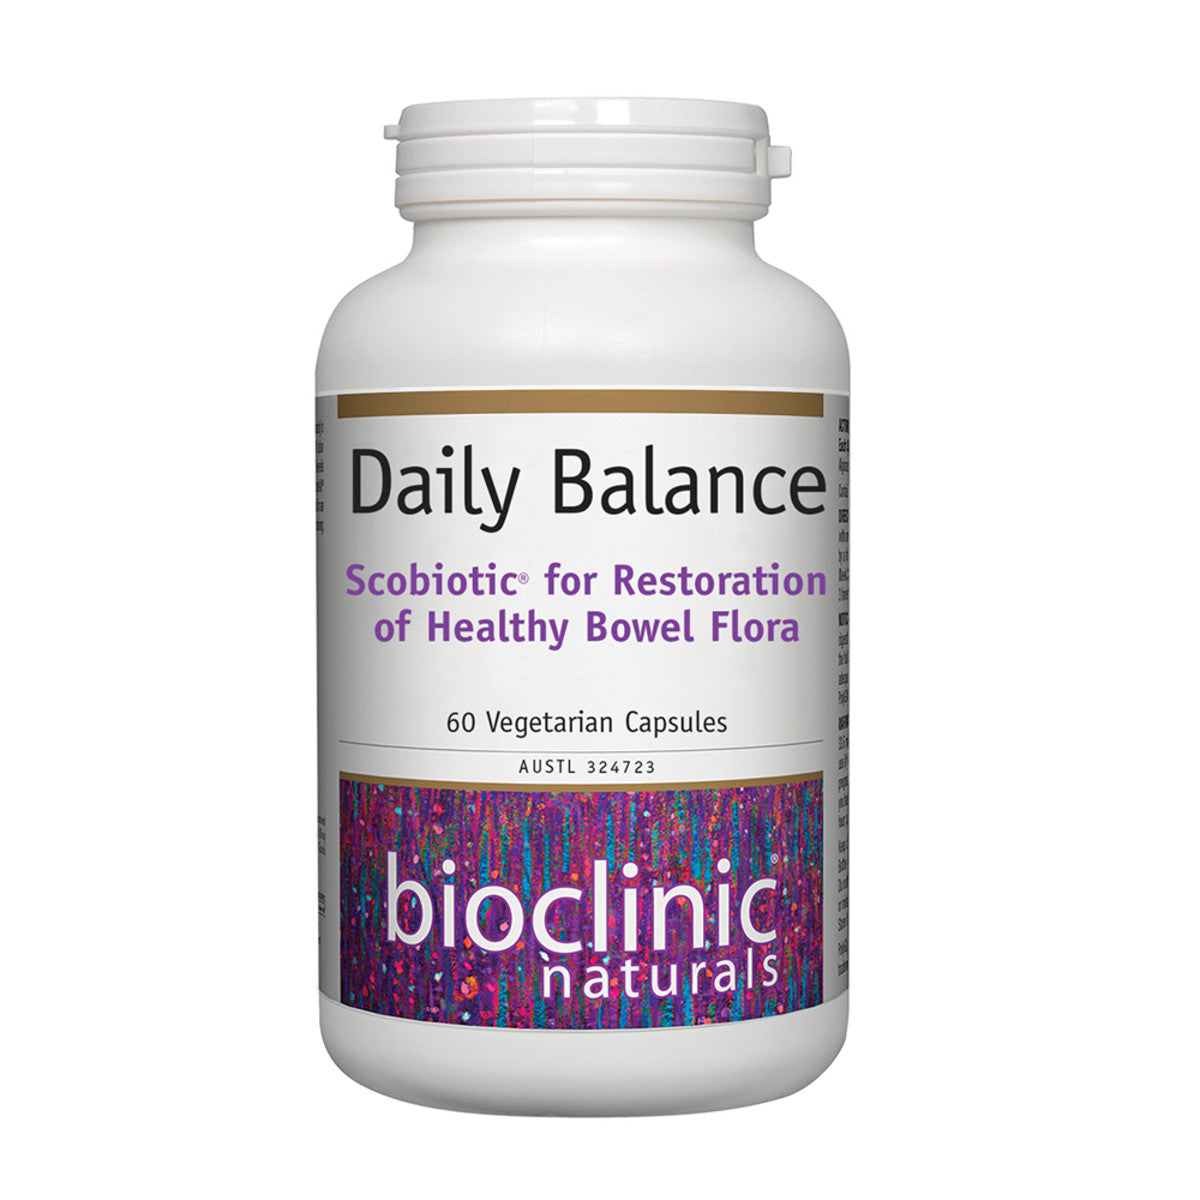 Bioclinic Naturals - Daily Balance